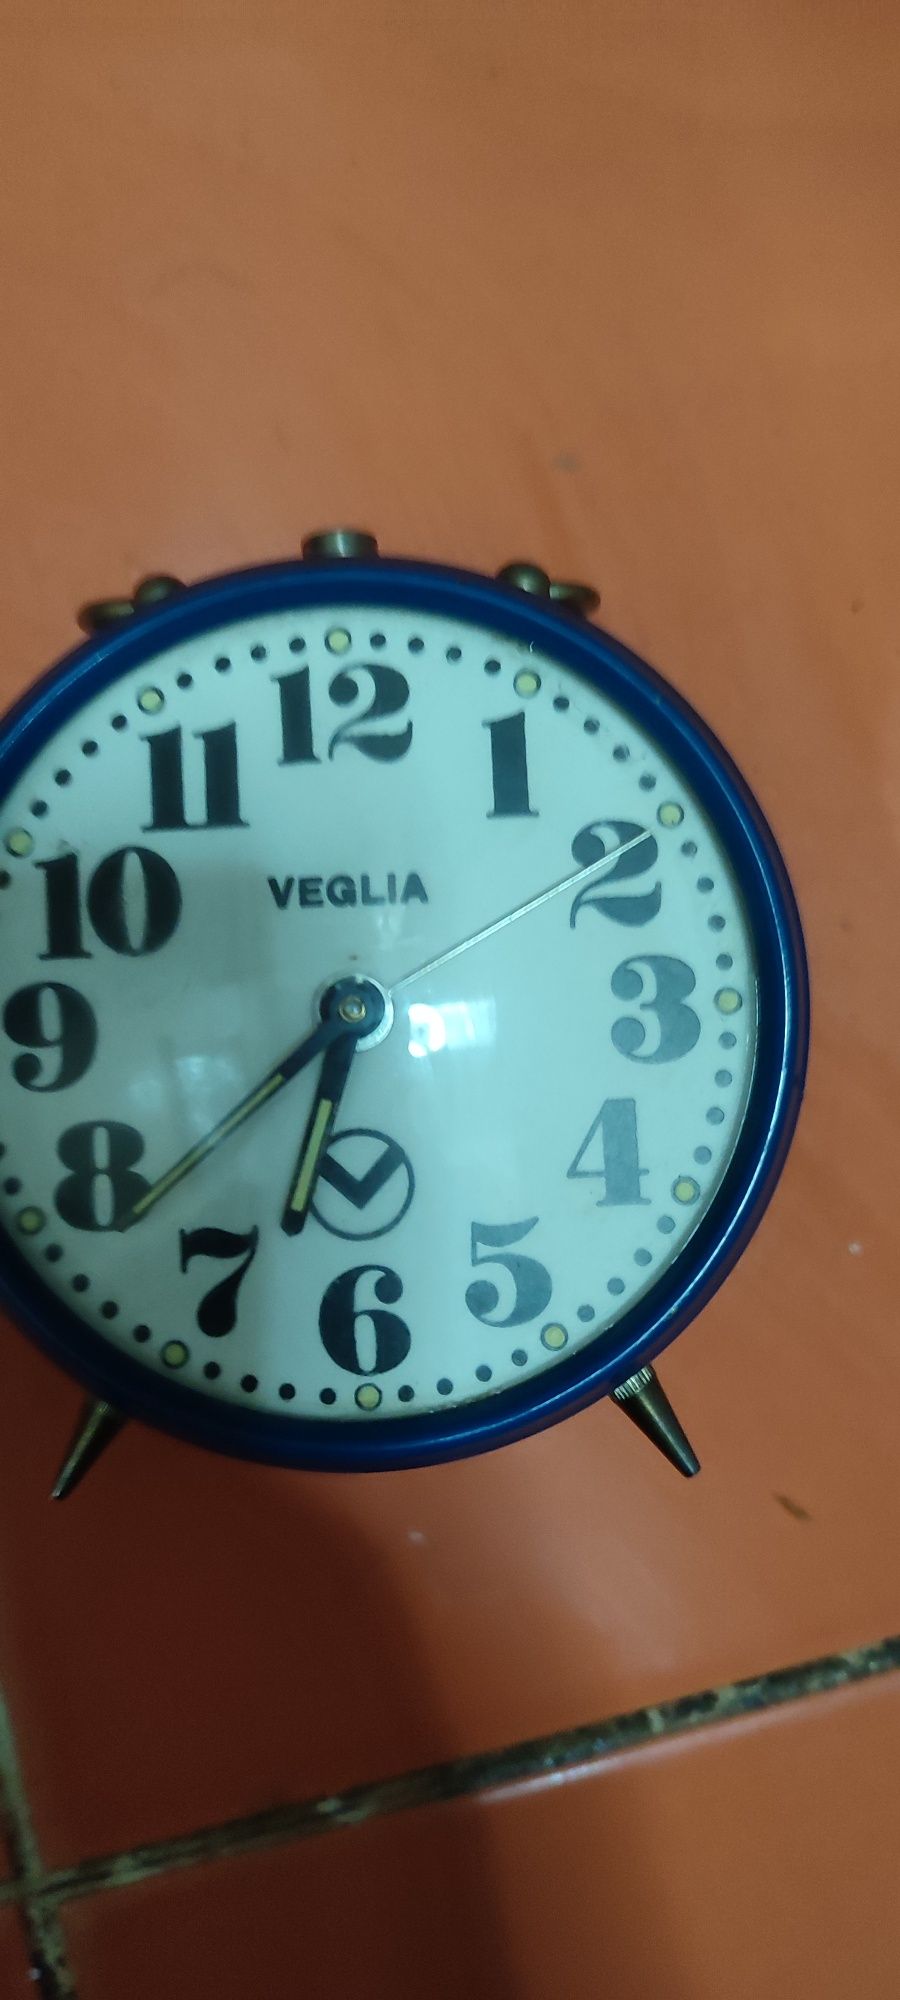 ceas veglia anii 60 mecanic frunctional,alarma nefunctional